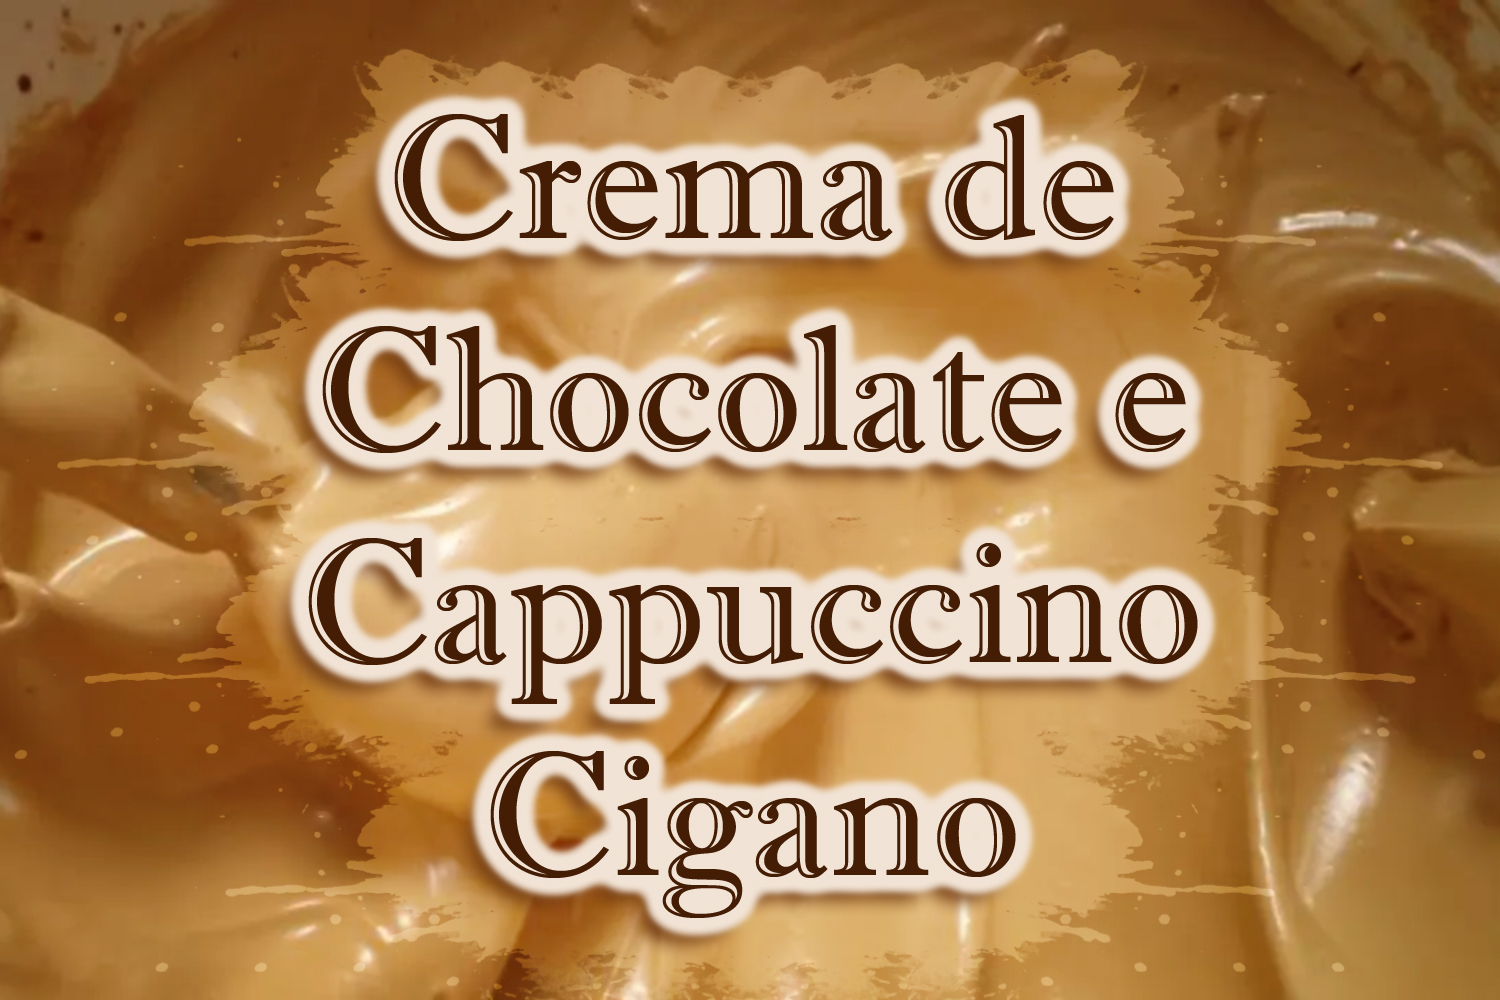 Crema de Chocolate e Cappuccino Cigano